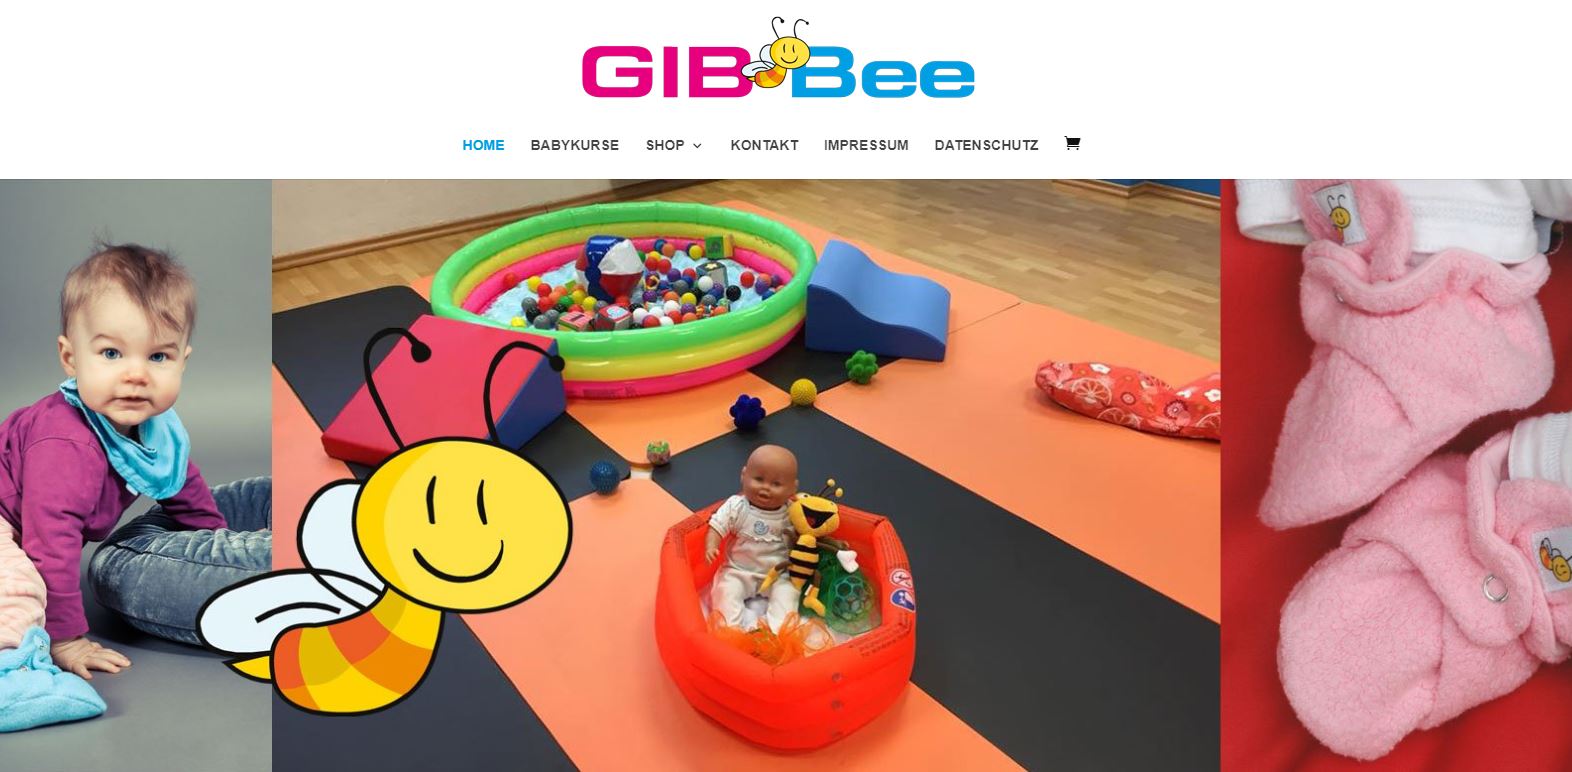 (c) Gib-bee.com